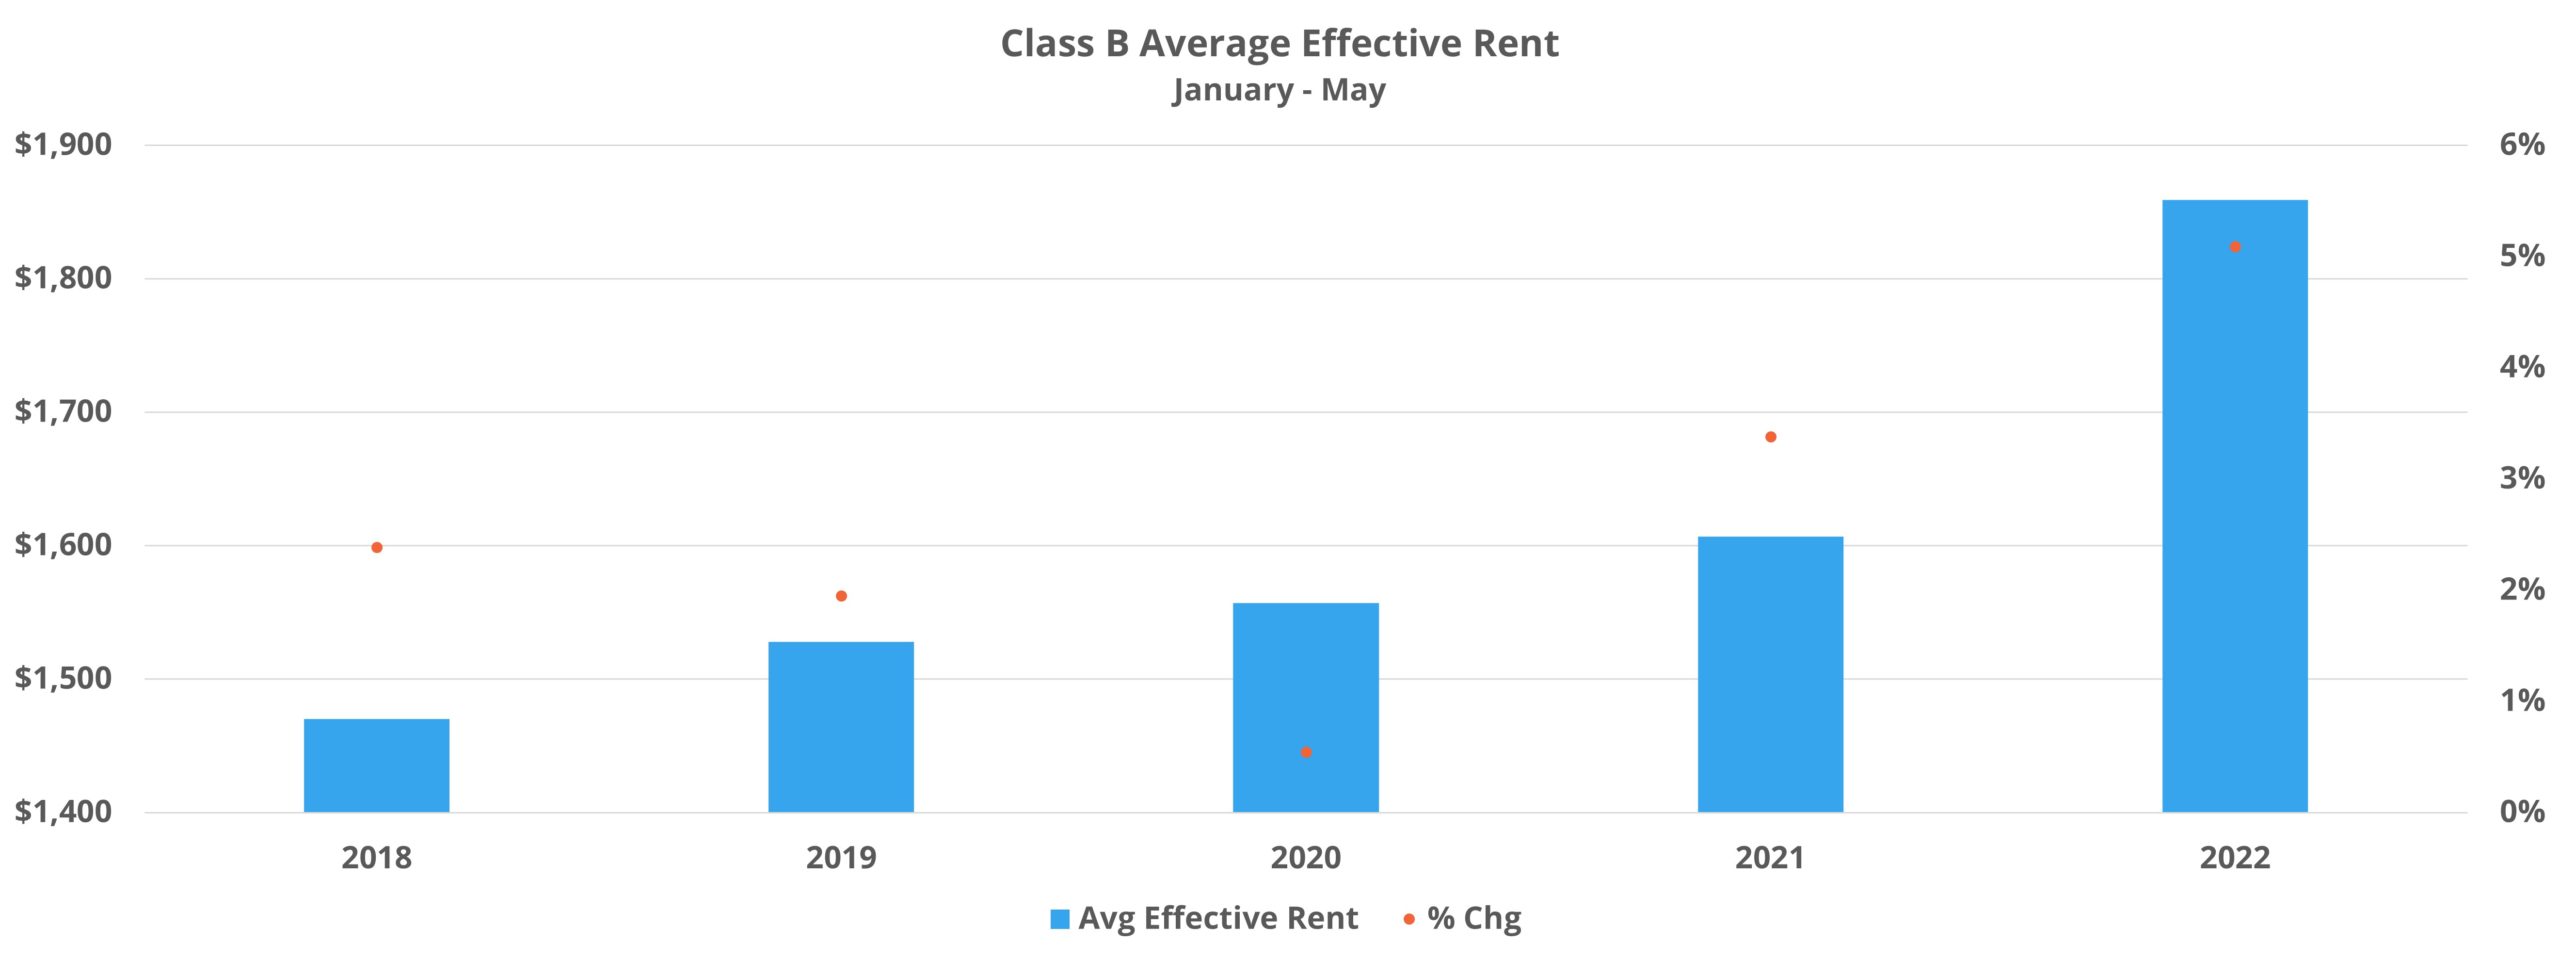 Class B Average Effective Rent